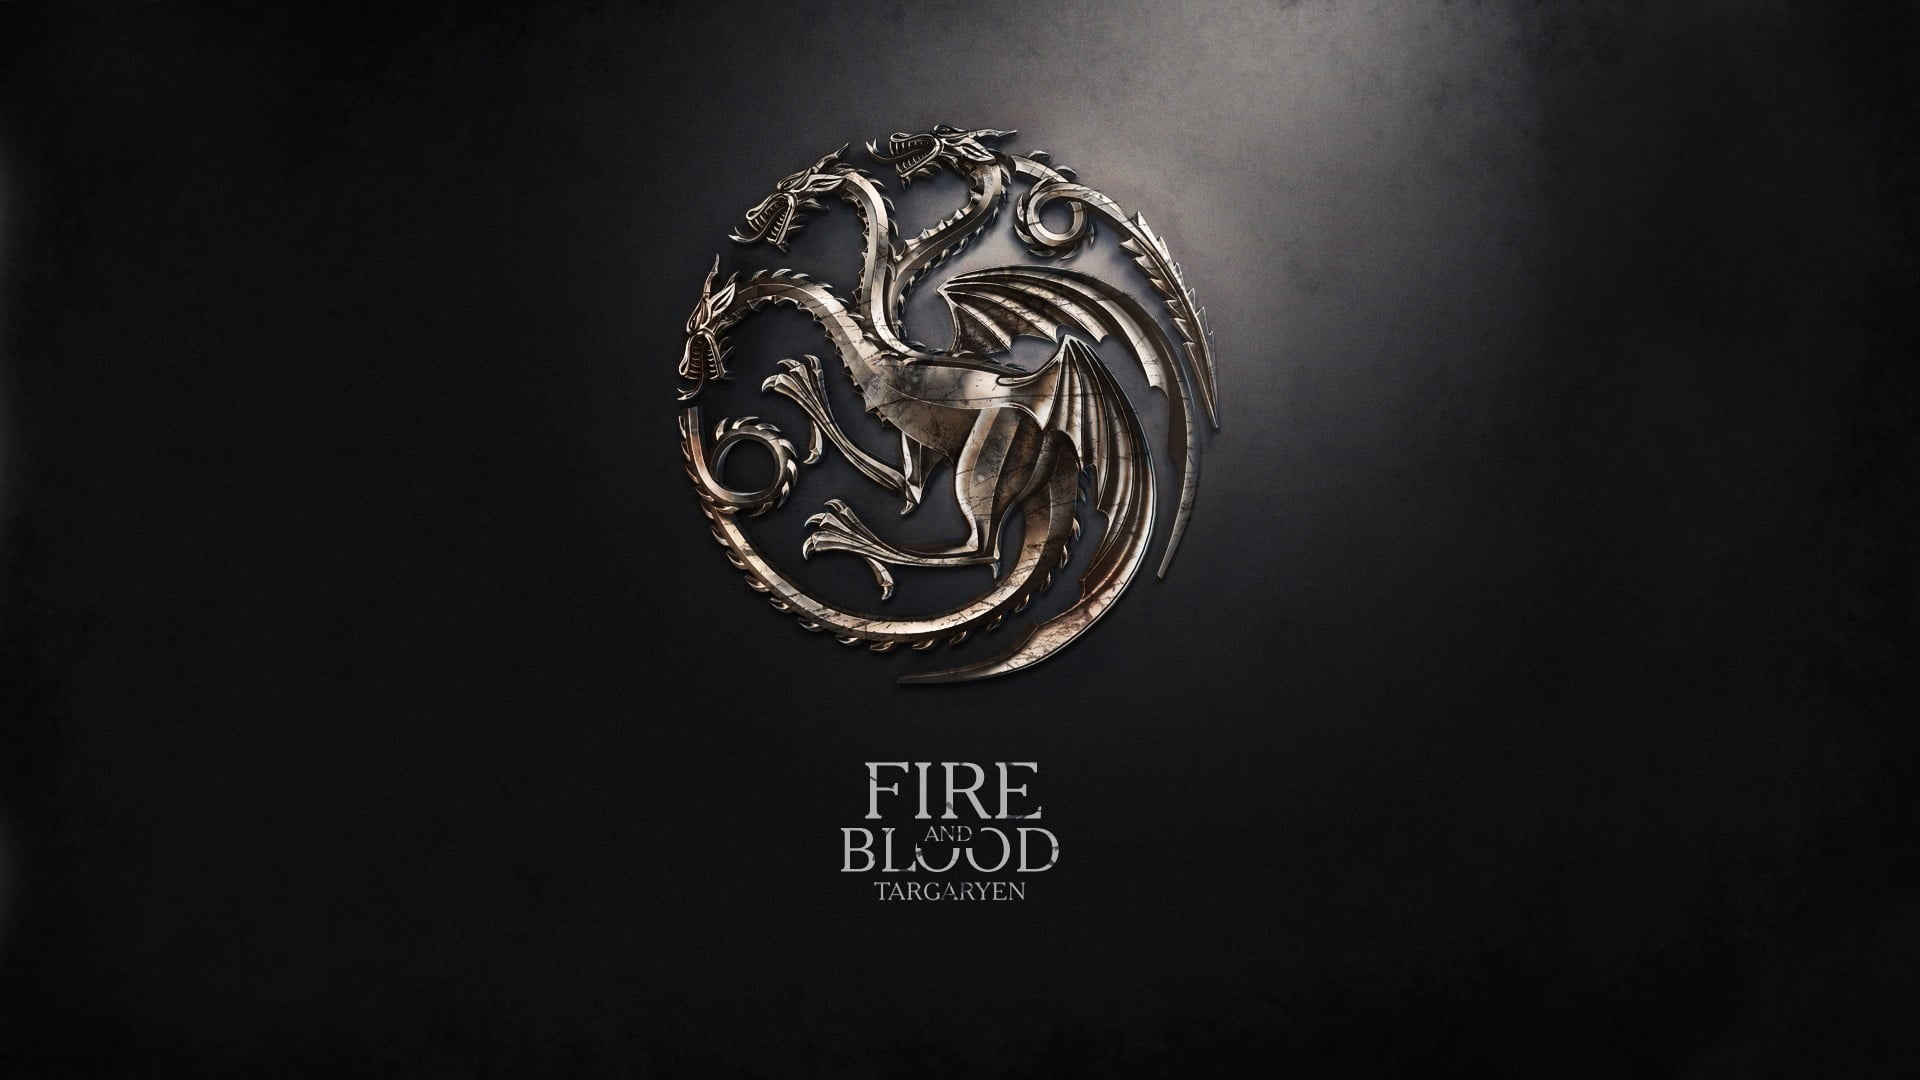 Fire Blood digital wallpaper, Game of Thrones, House Targaryen